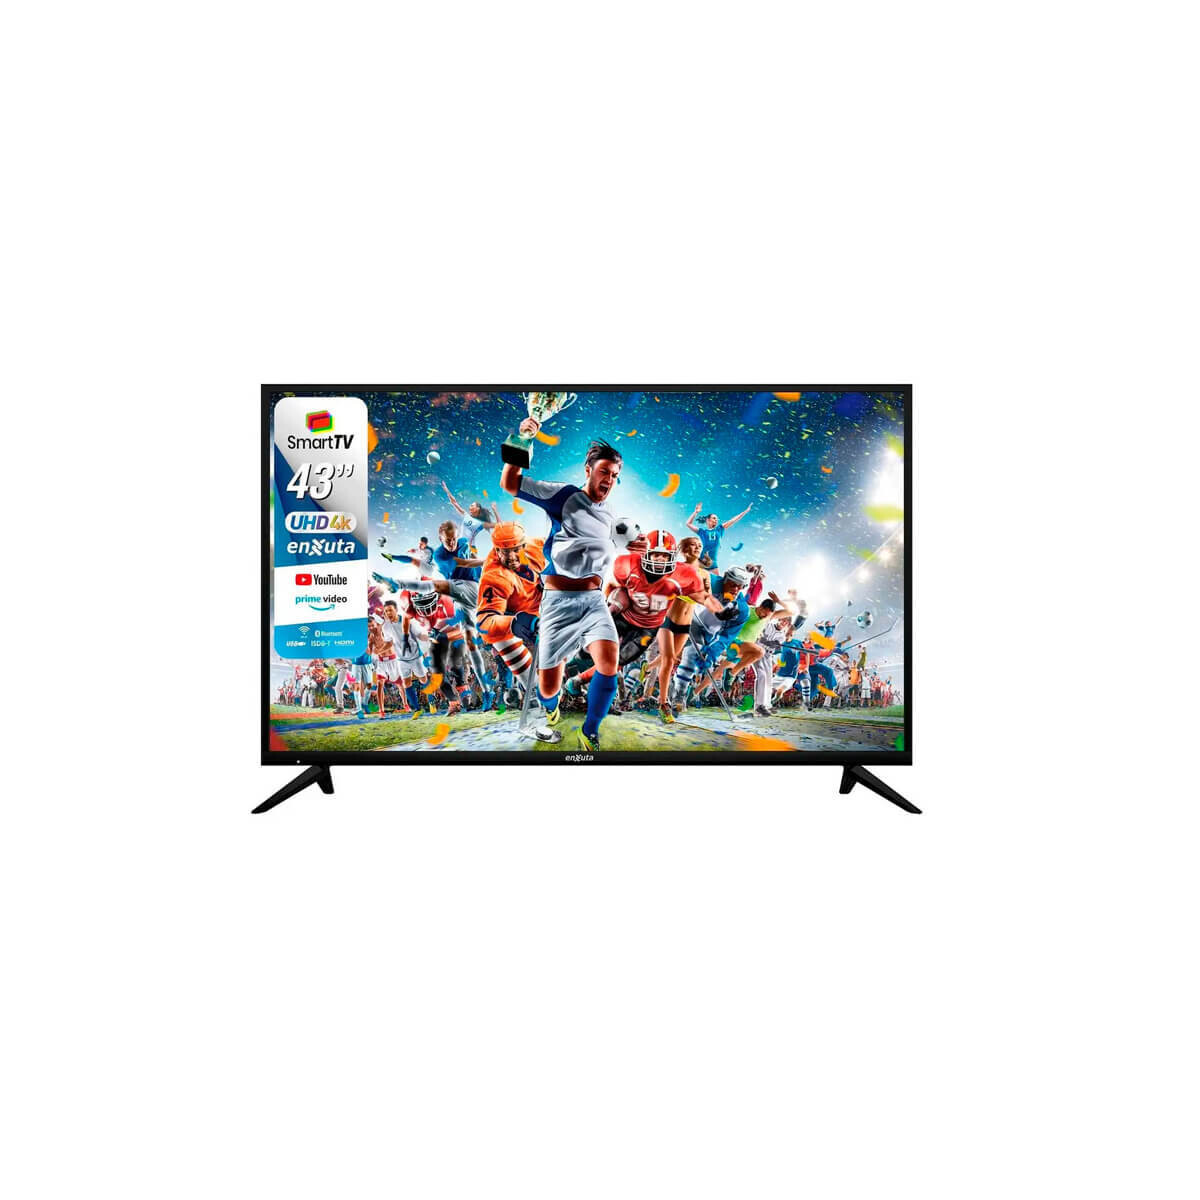 Smart Tv Enxuta 4k 43 pulgadas Ledenx1243sdf4kl Linux